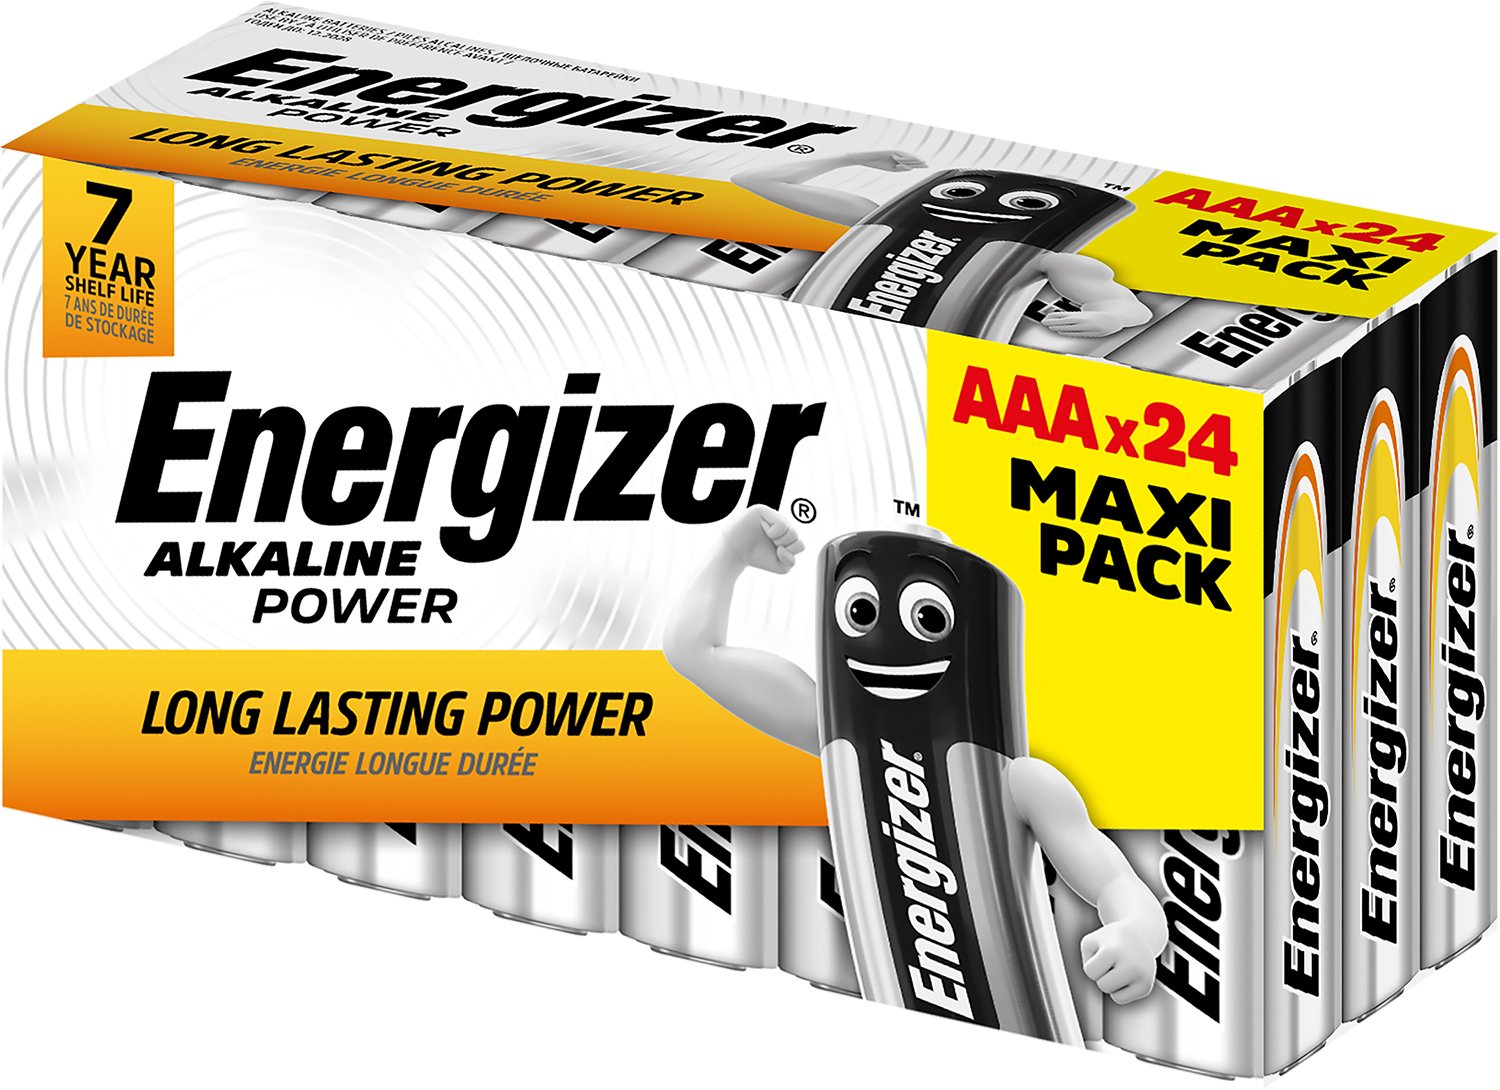 Energizer Alkaline Power 24 pack Energizer Alkaline AAA 24 pack